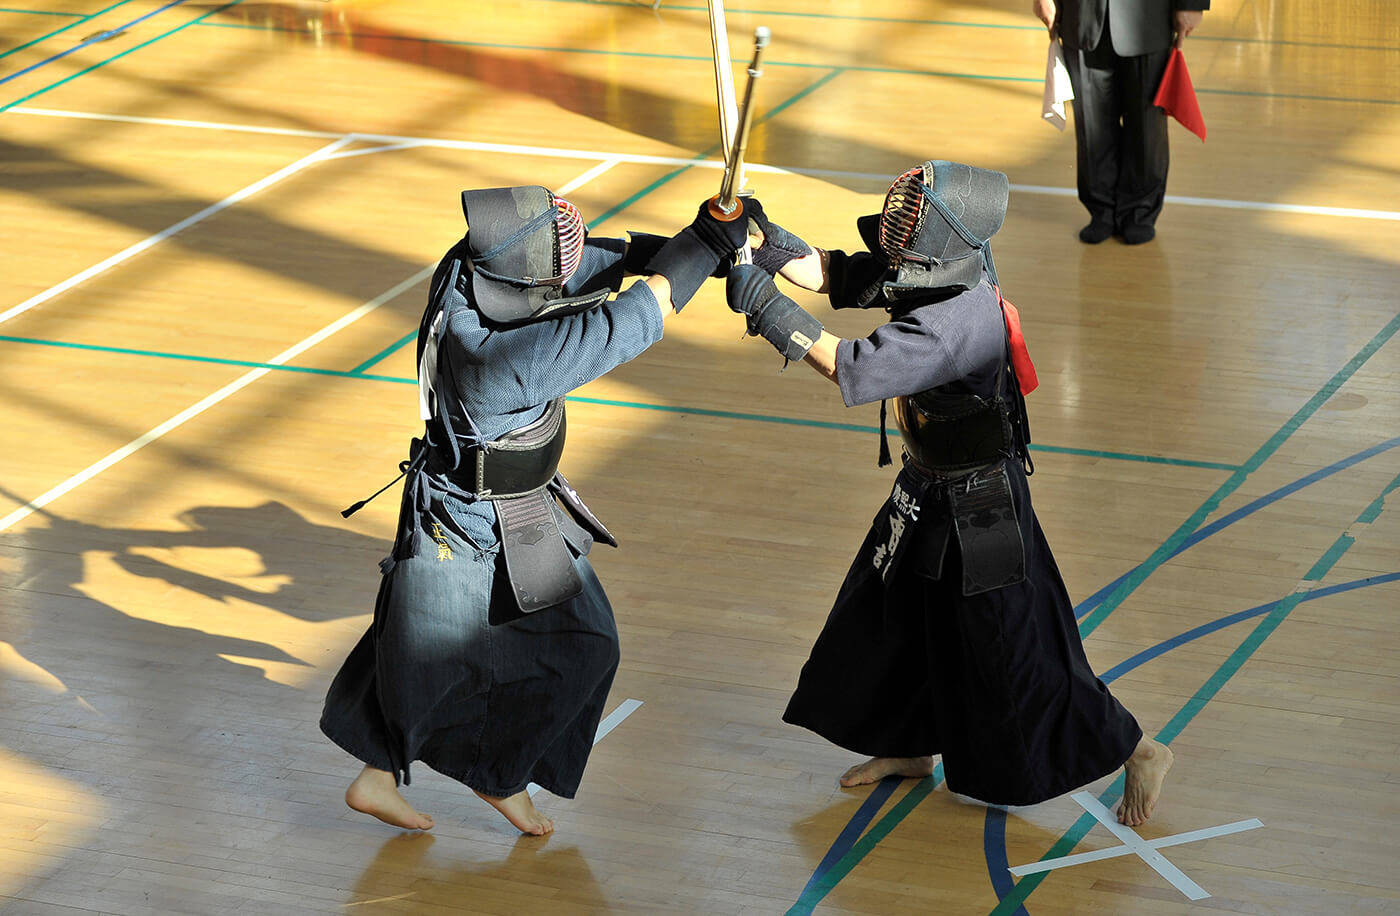 Kendo japansk Martial Arts Battle Scene wallpaper: Wallpaper